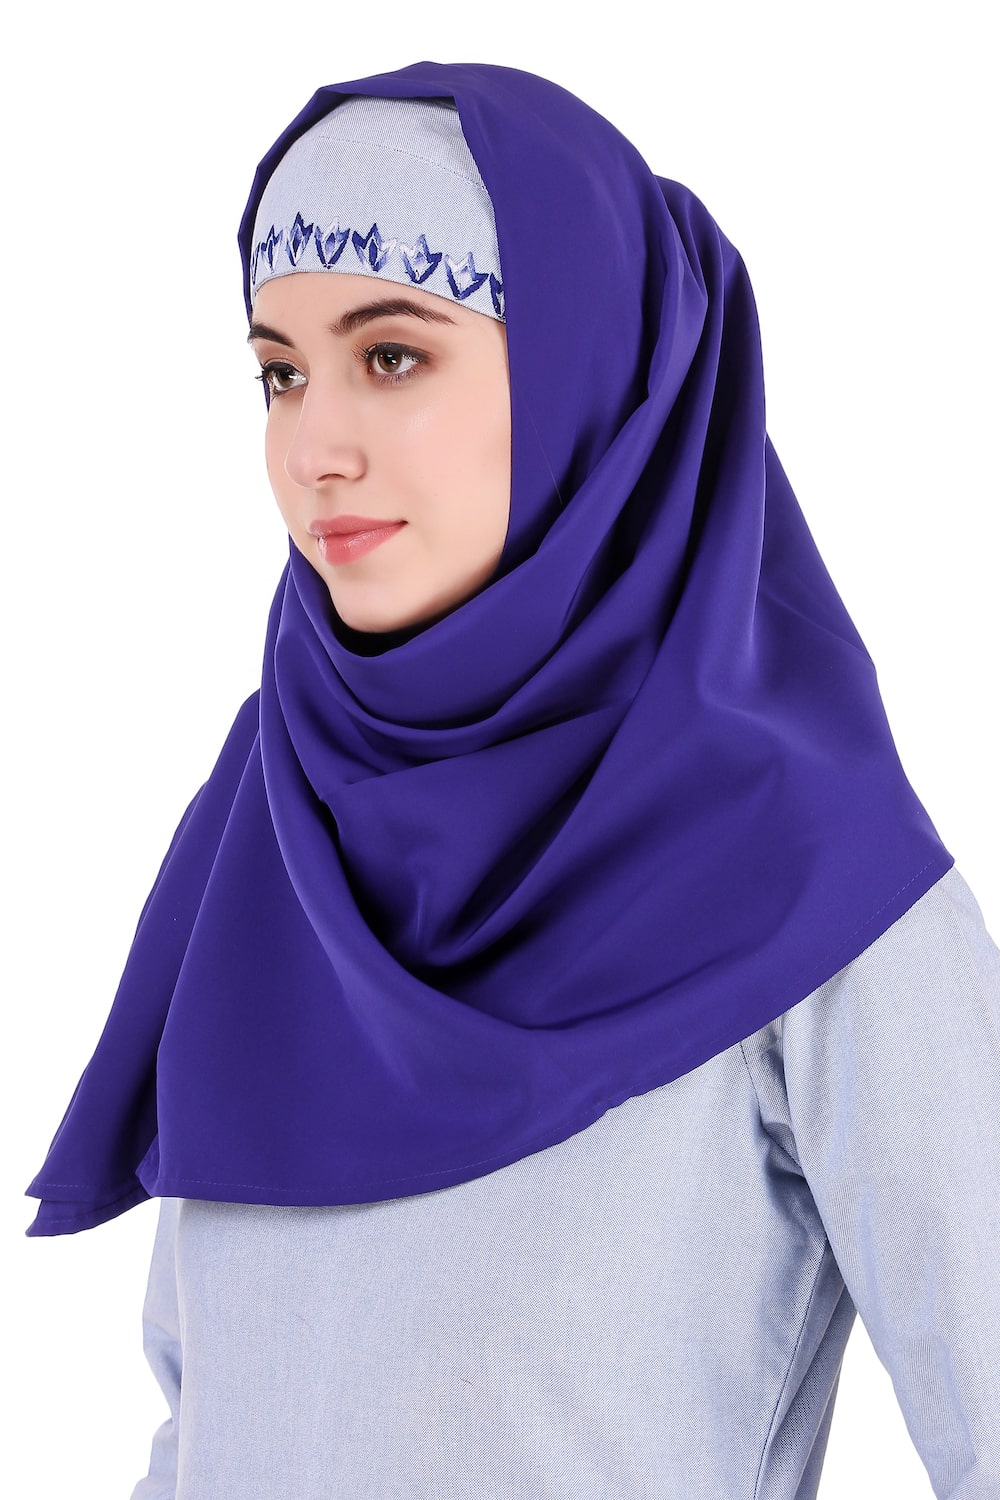 Royal Blue Kashibo Hijab